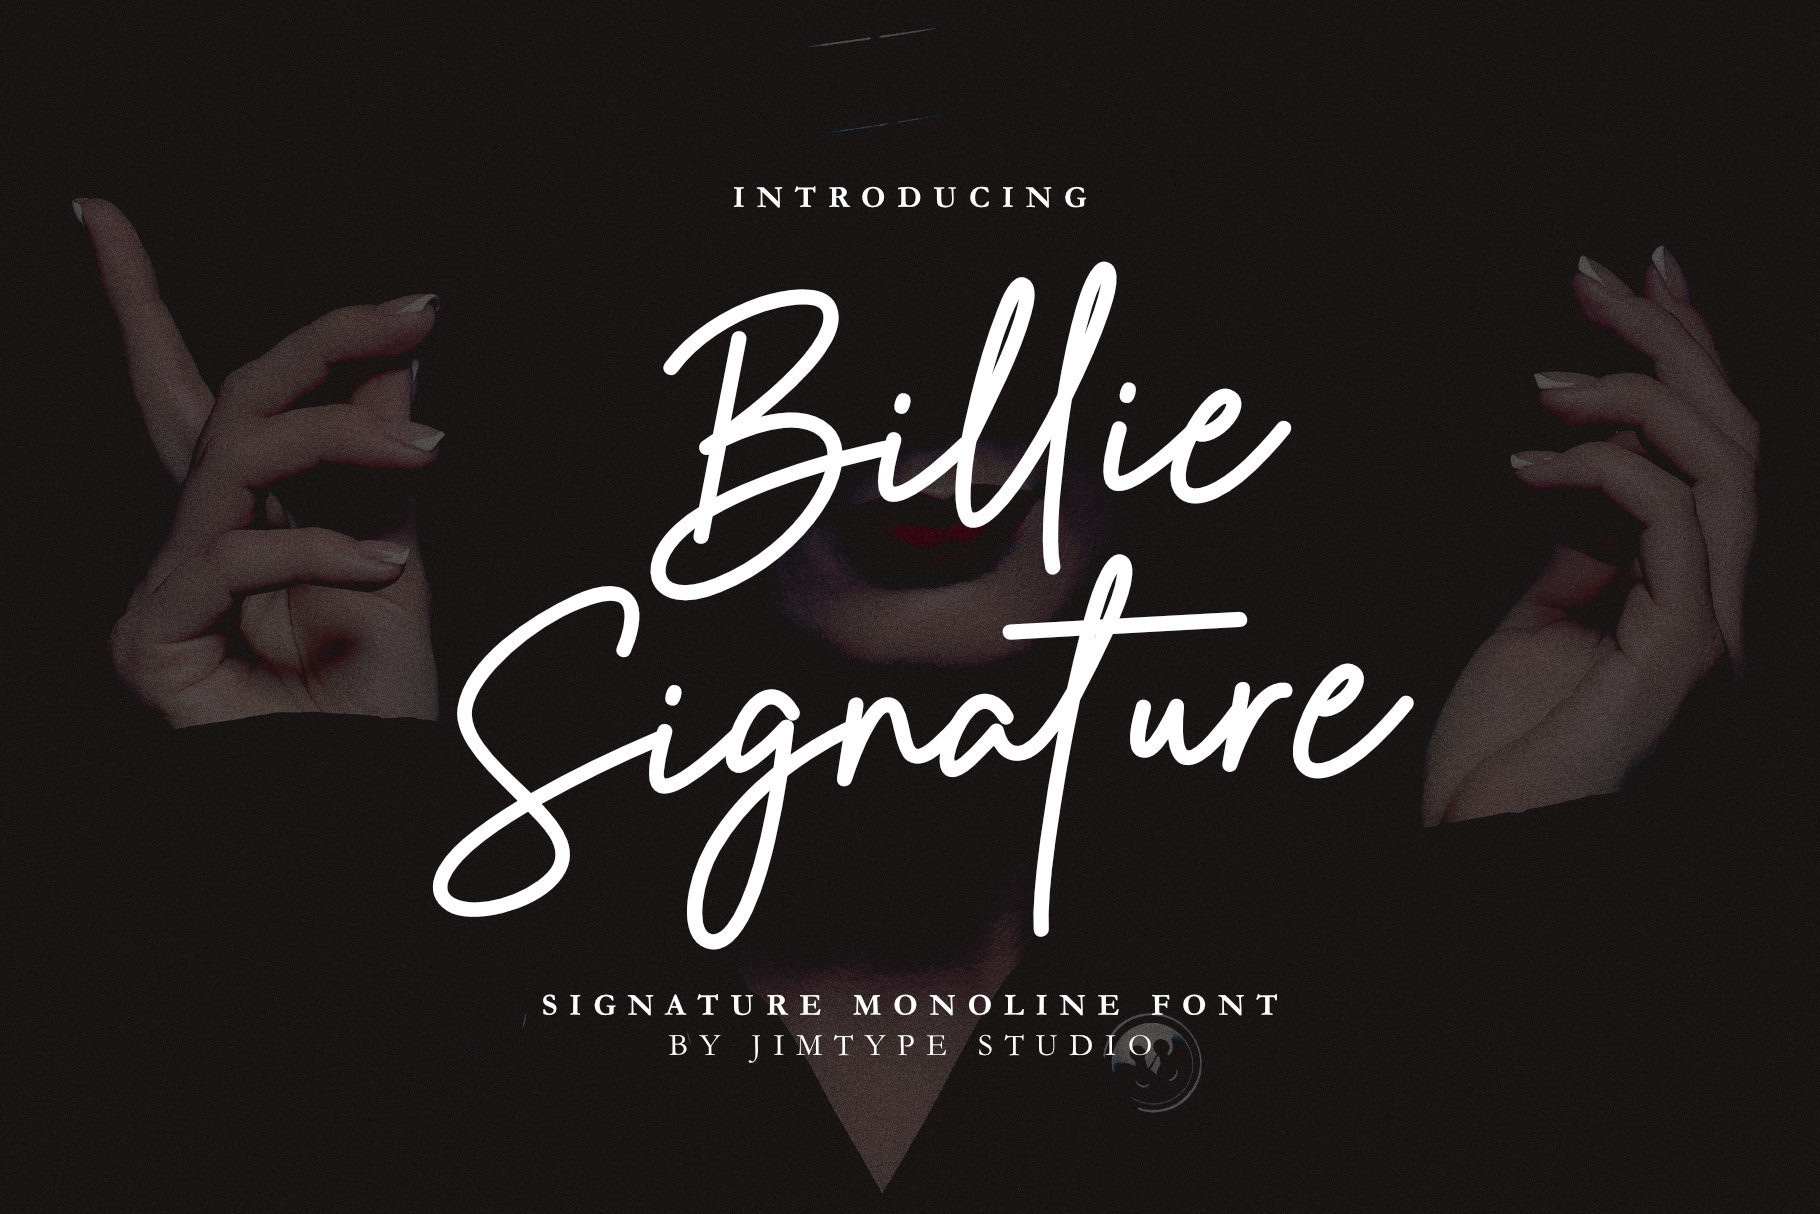 Billie Signature DEMO! DEMO!